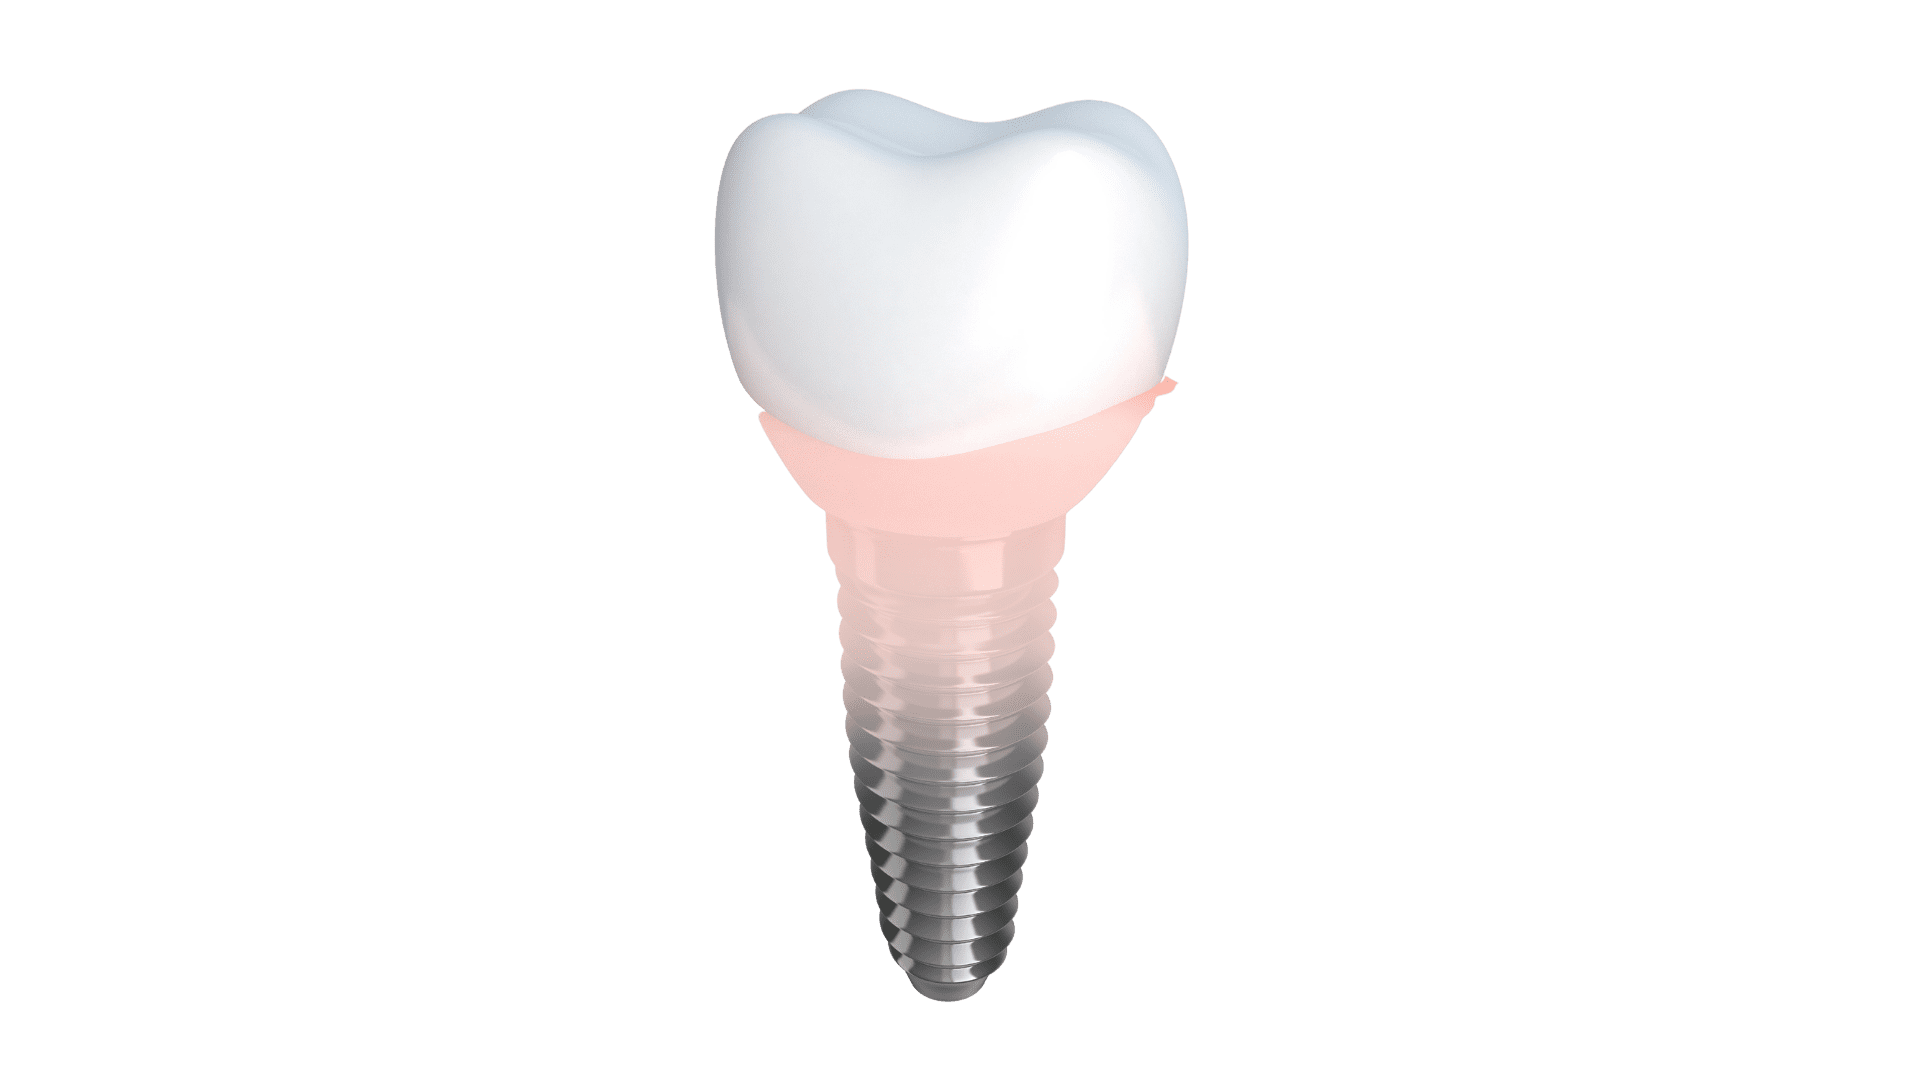 implant diş